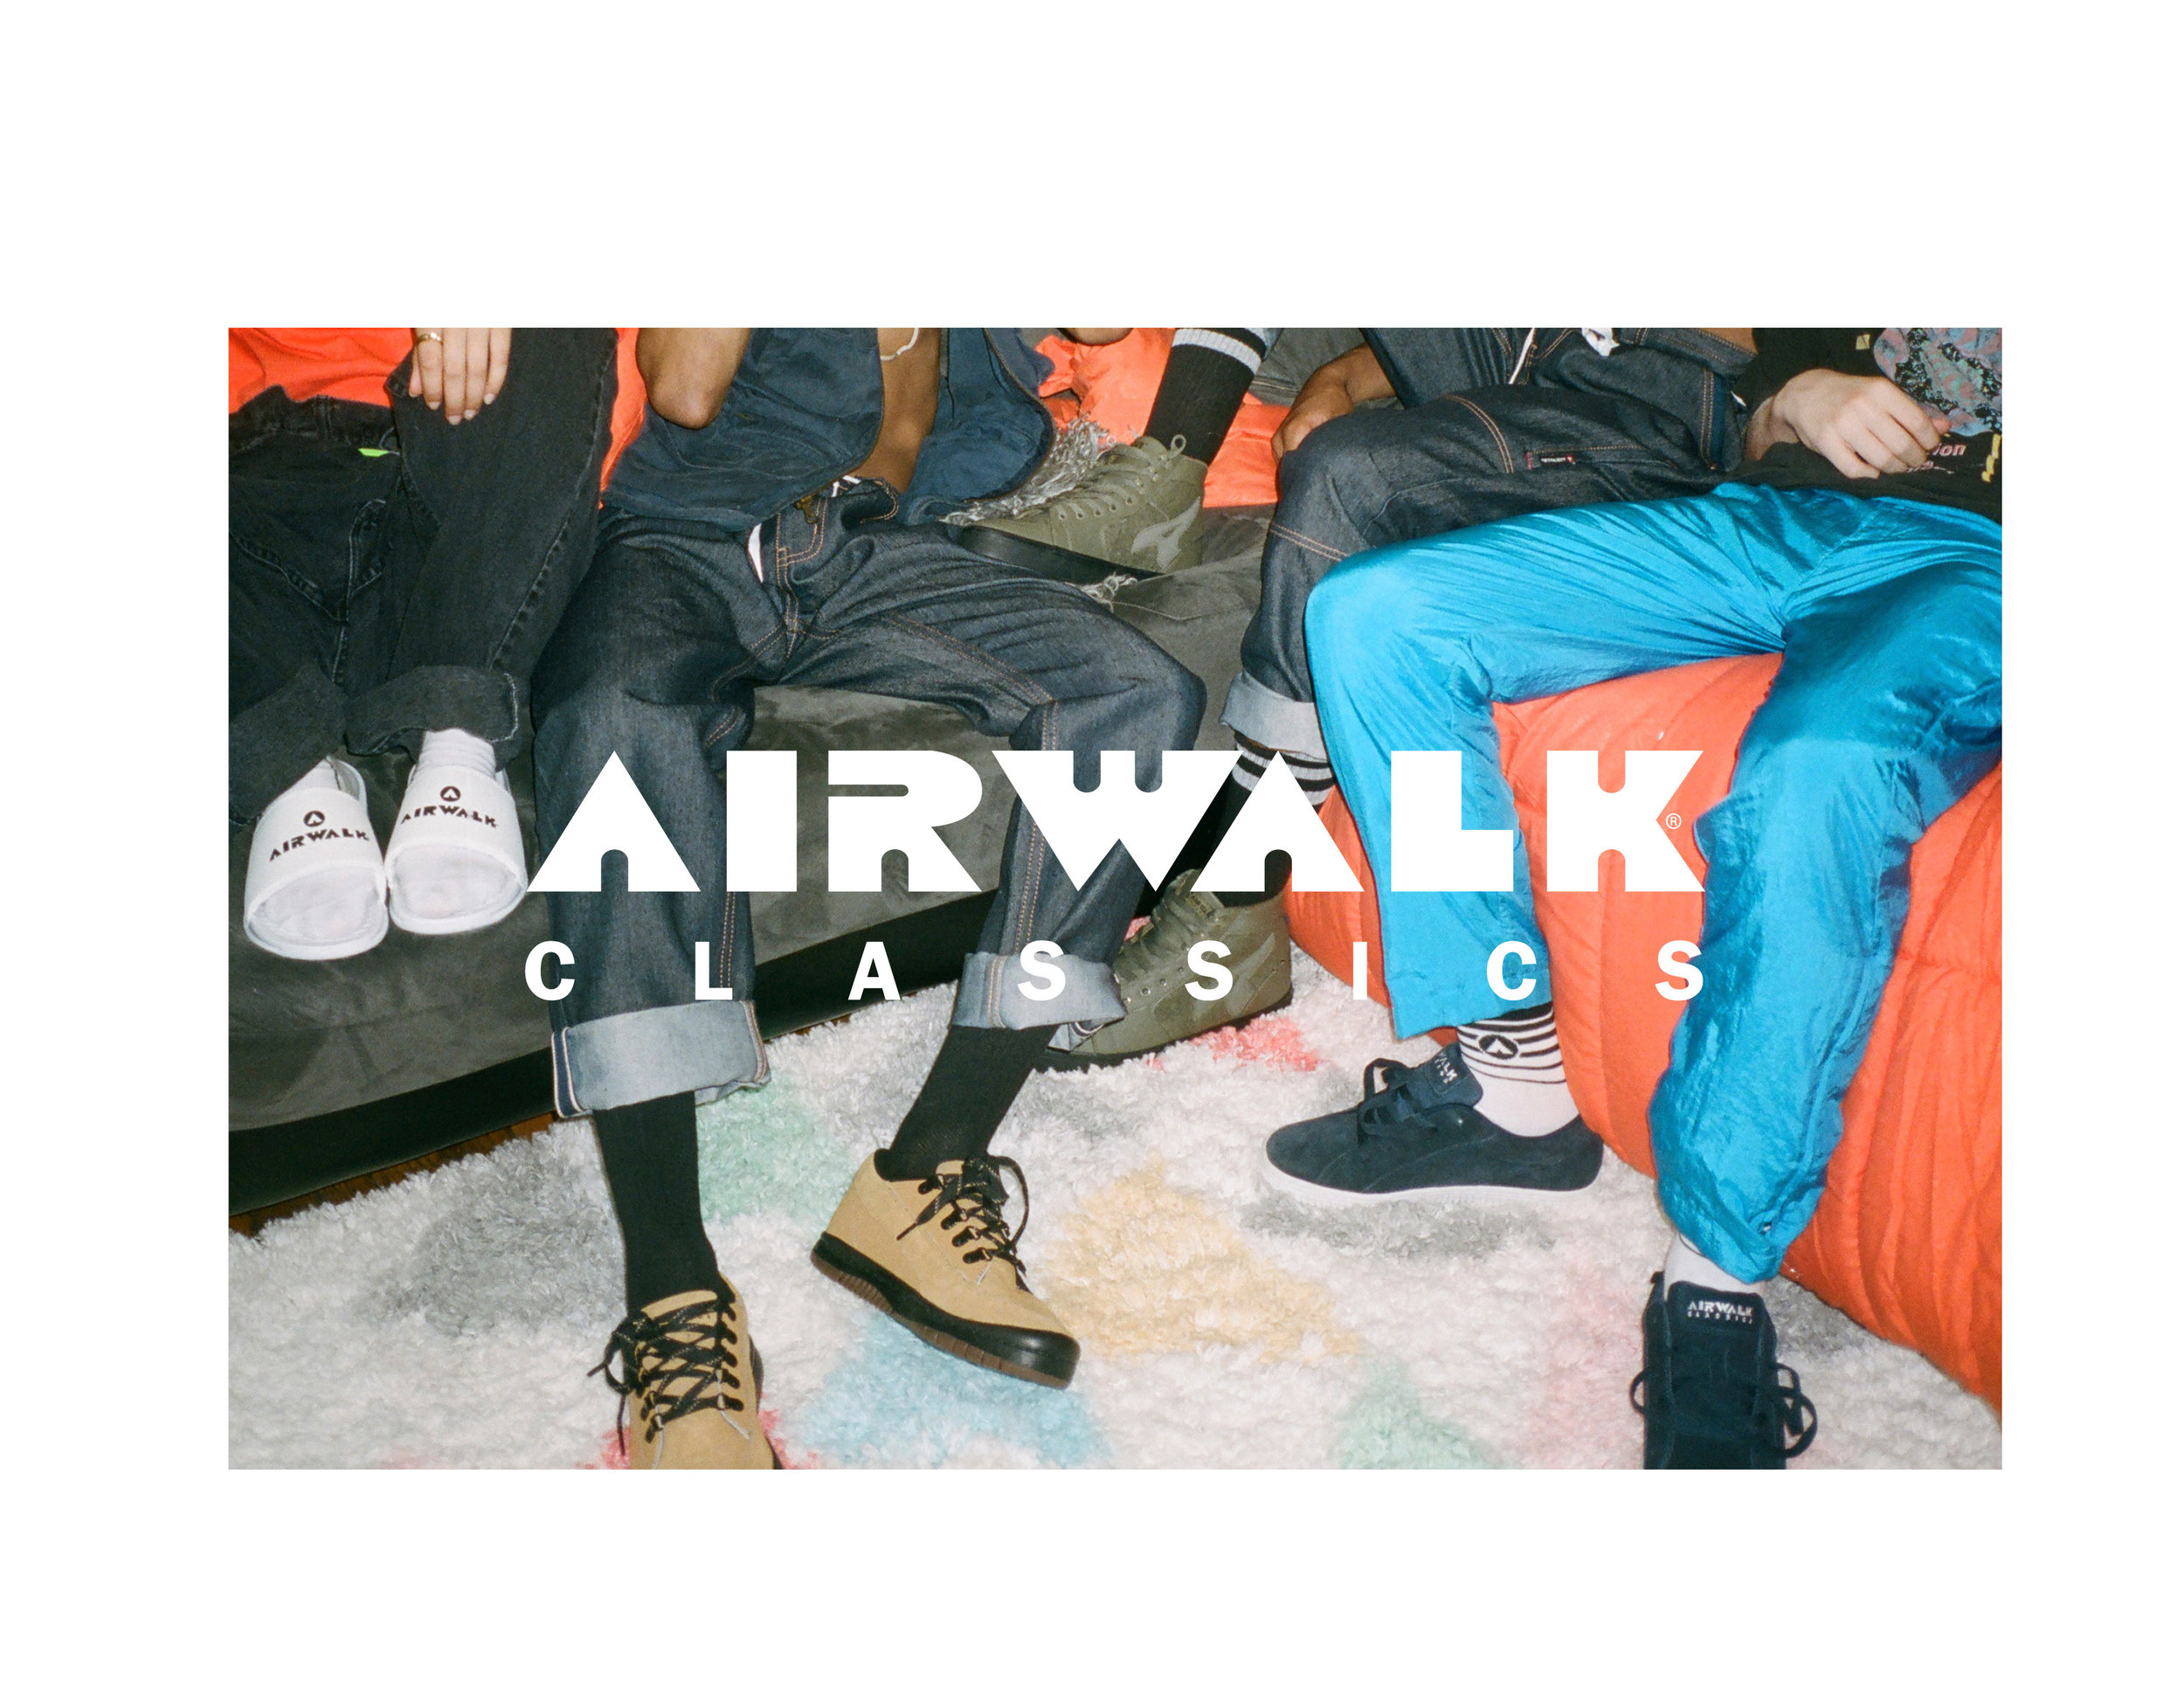 airwalk skate shoes 9s